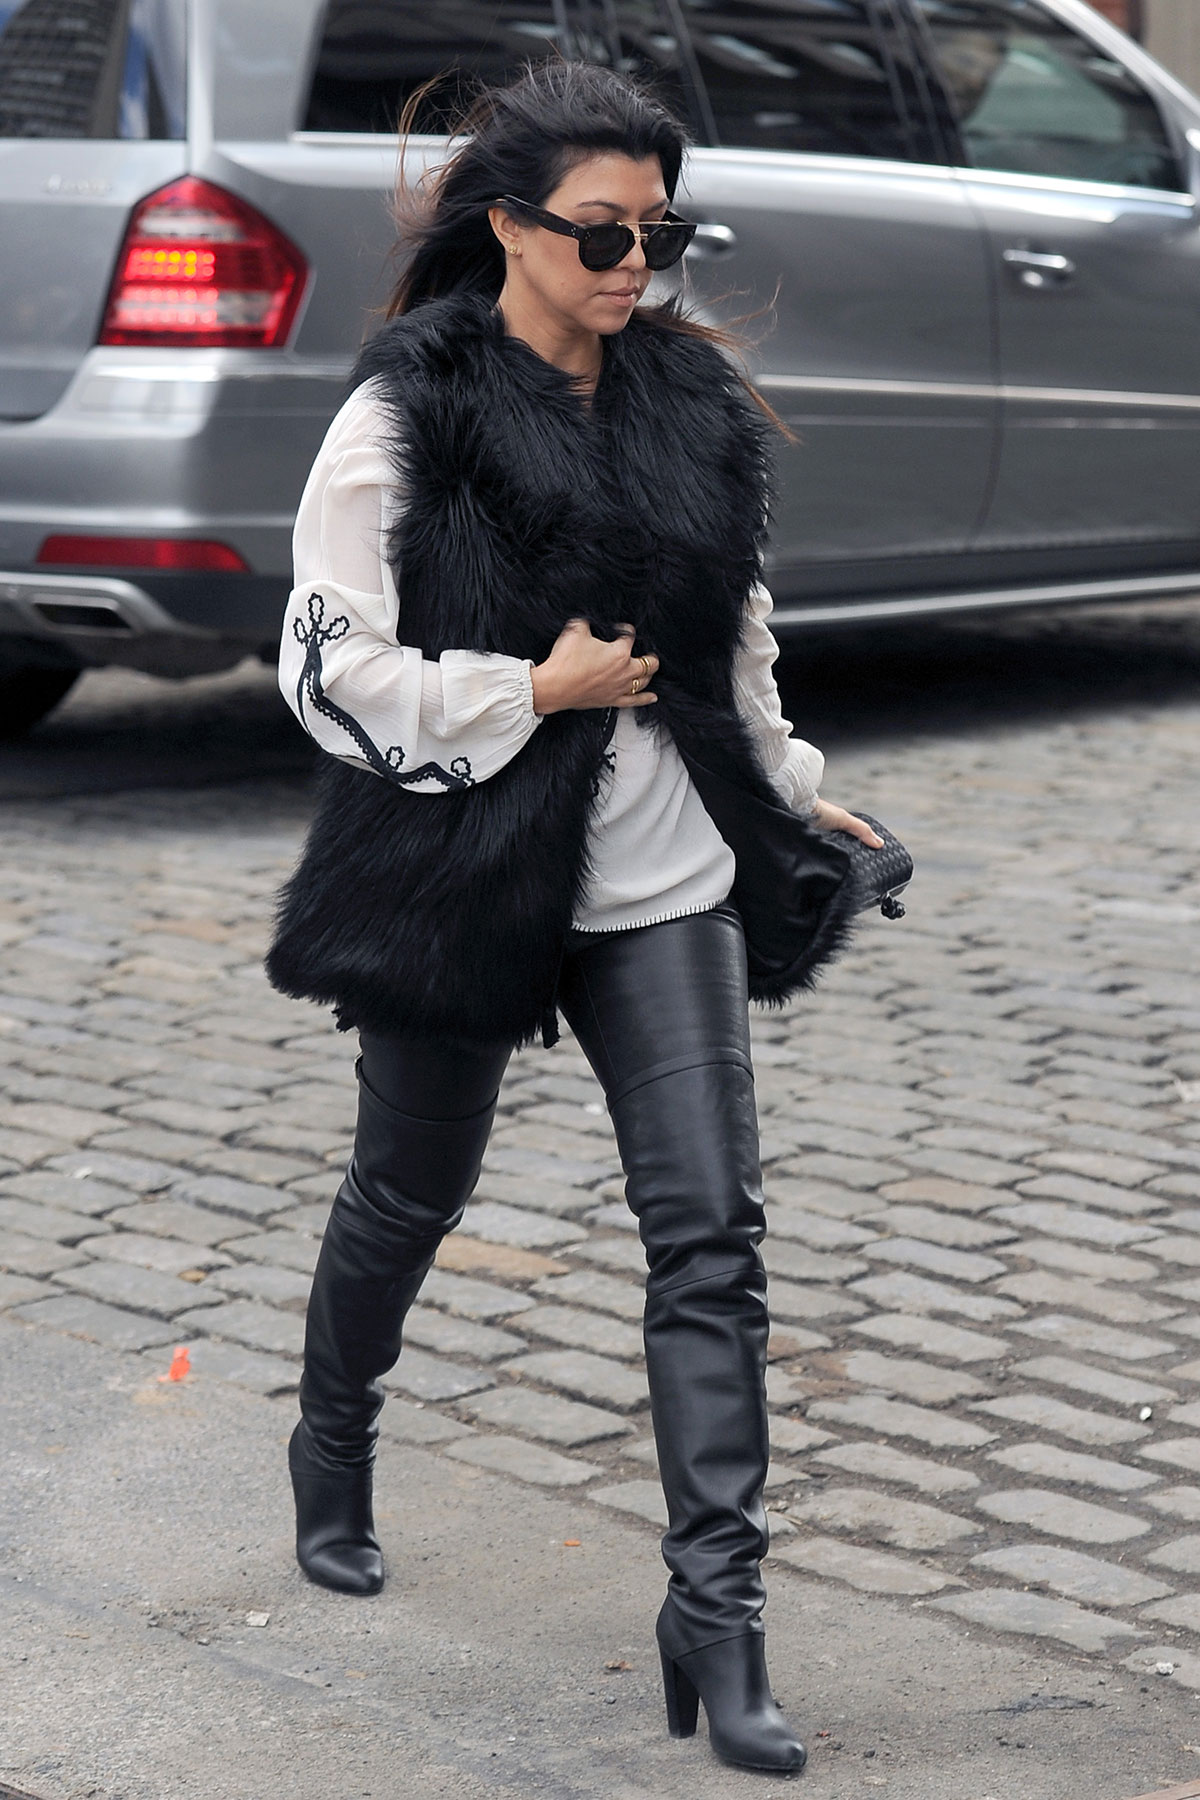 Kourtney Kardashian shopping for baby clothes